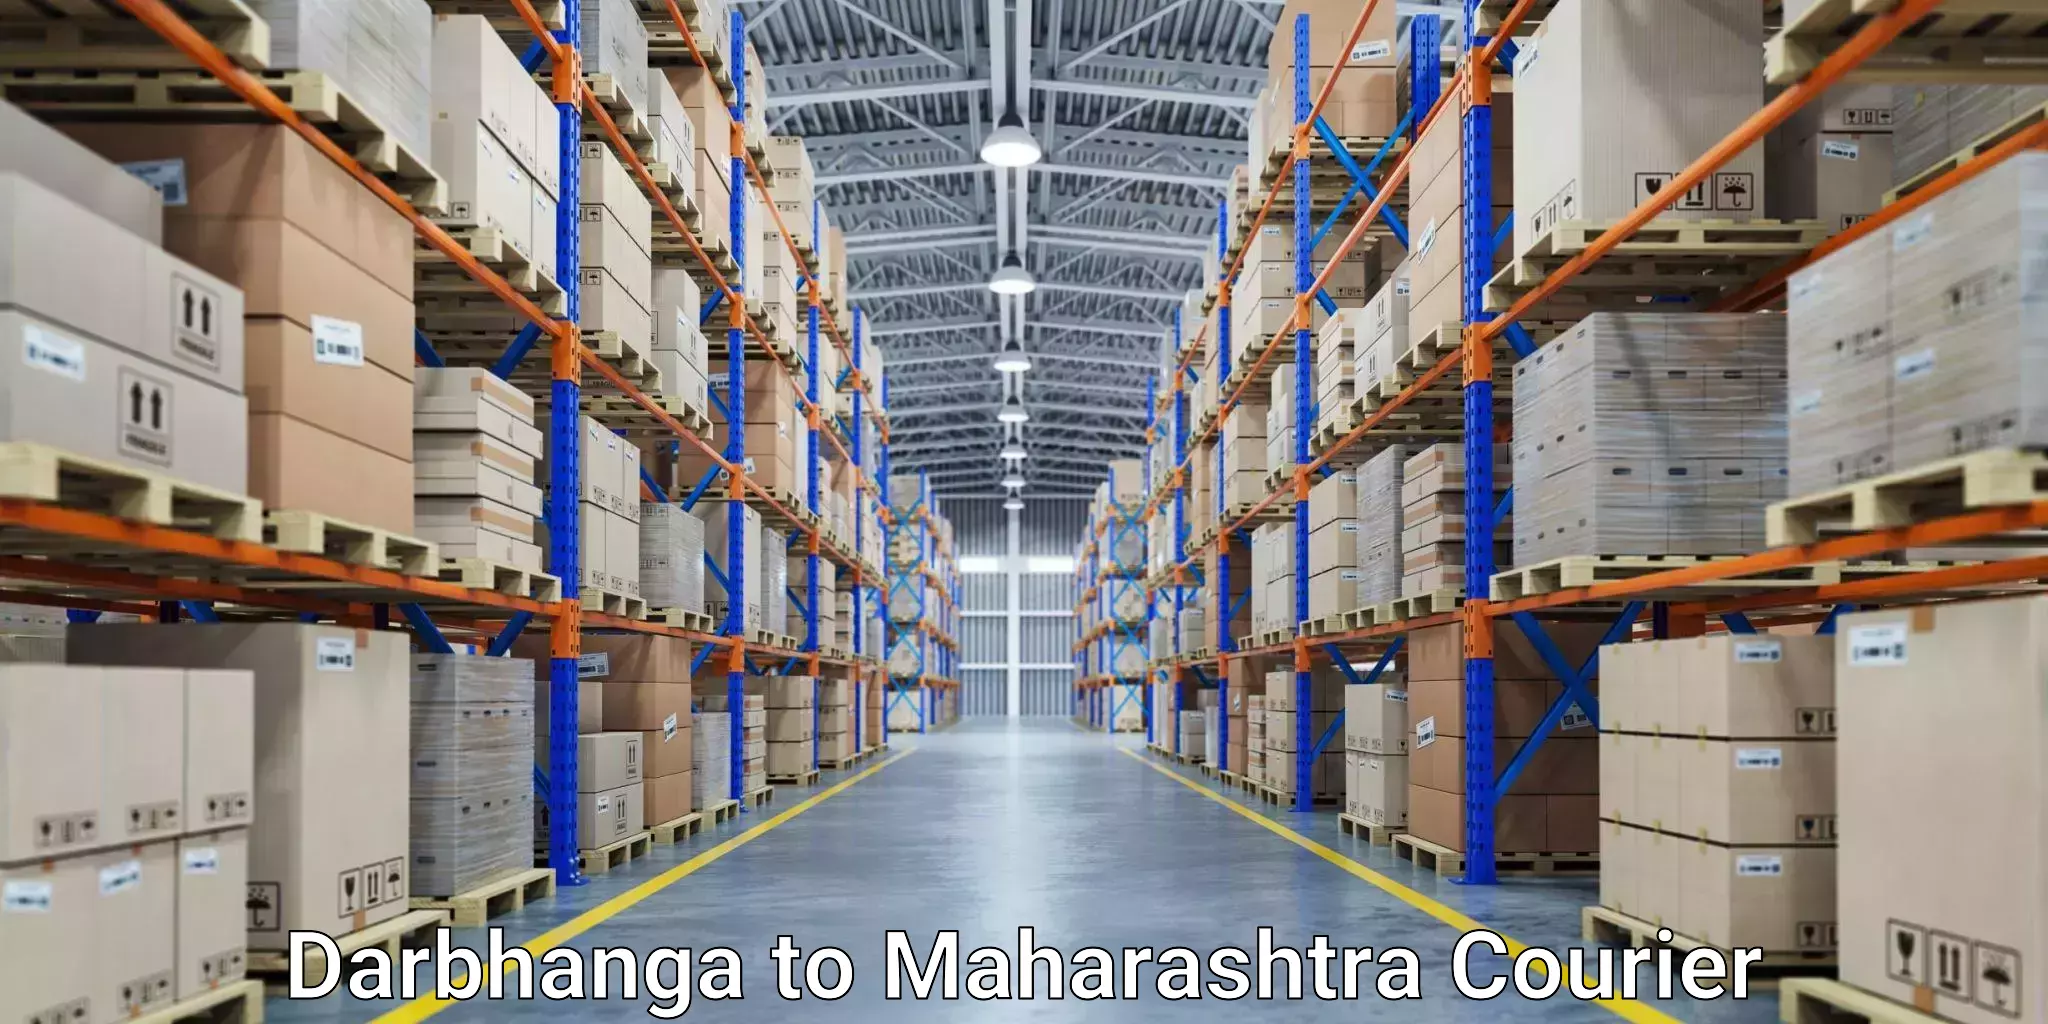 Seamless shipping experience in Darbhanga to Nandurbar